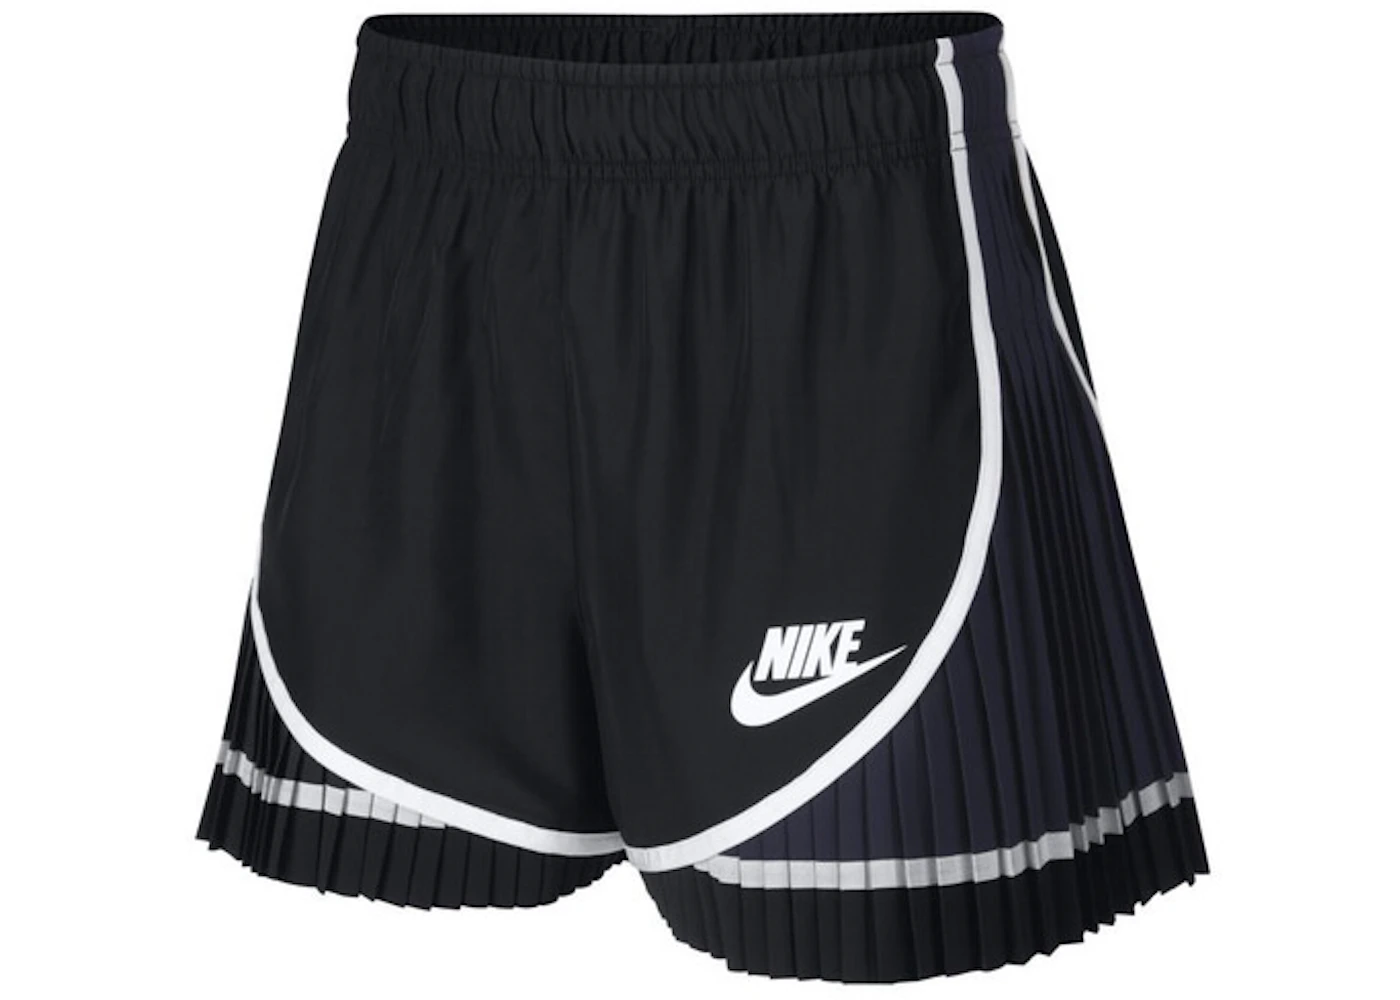 Nike x Sacai Shorts Black/Navy - FW19